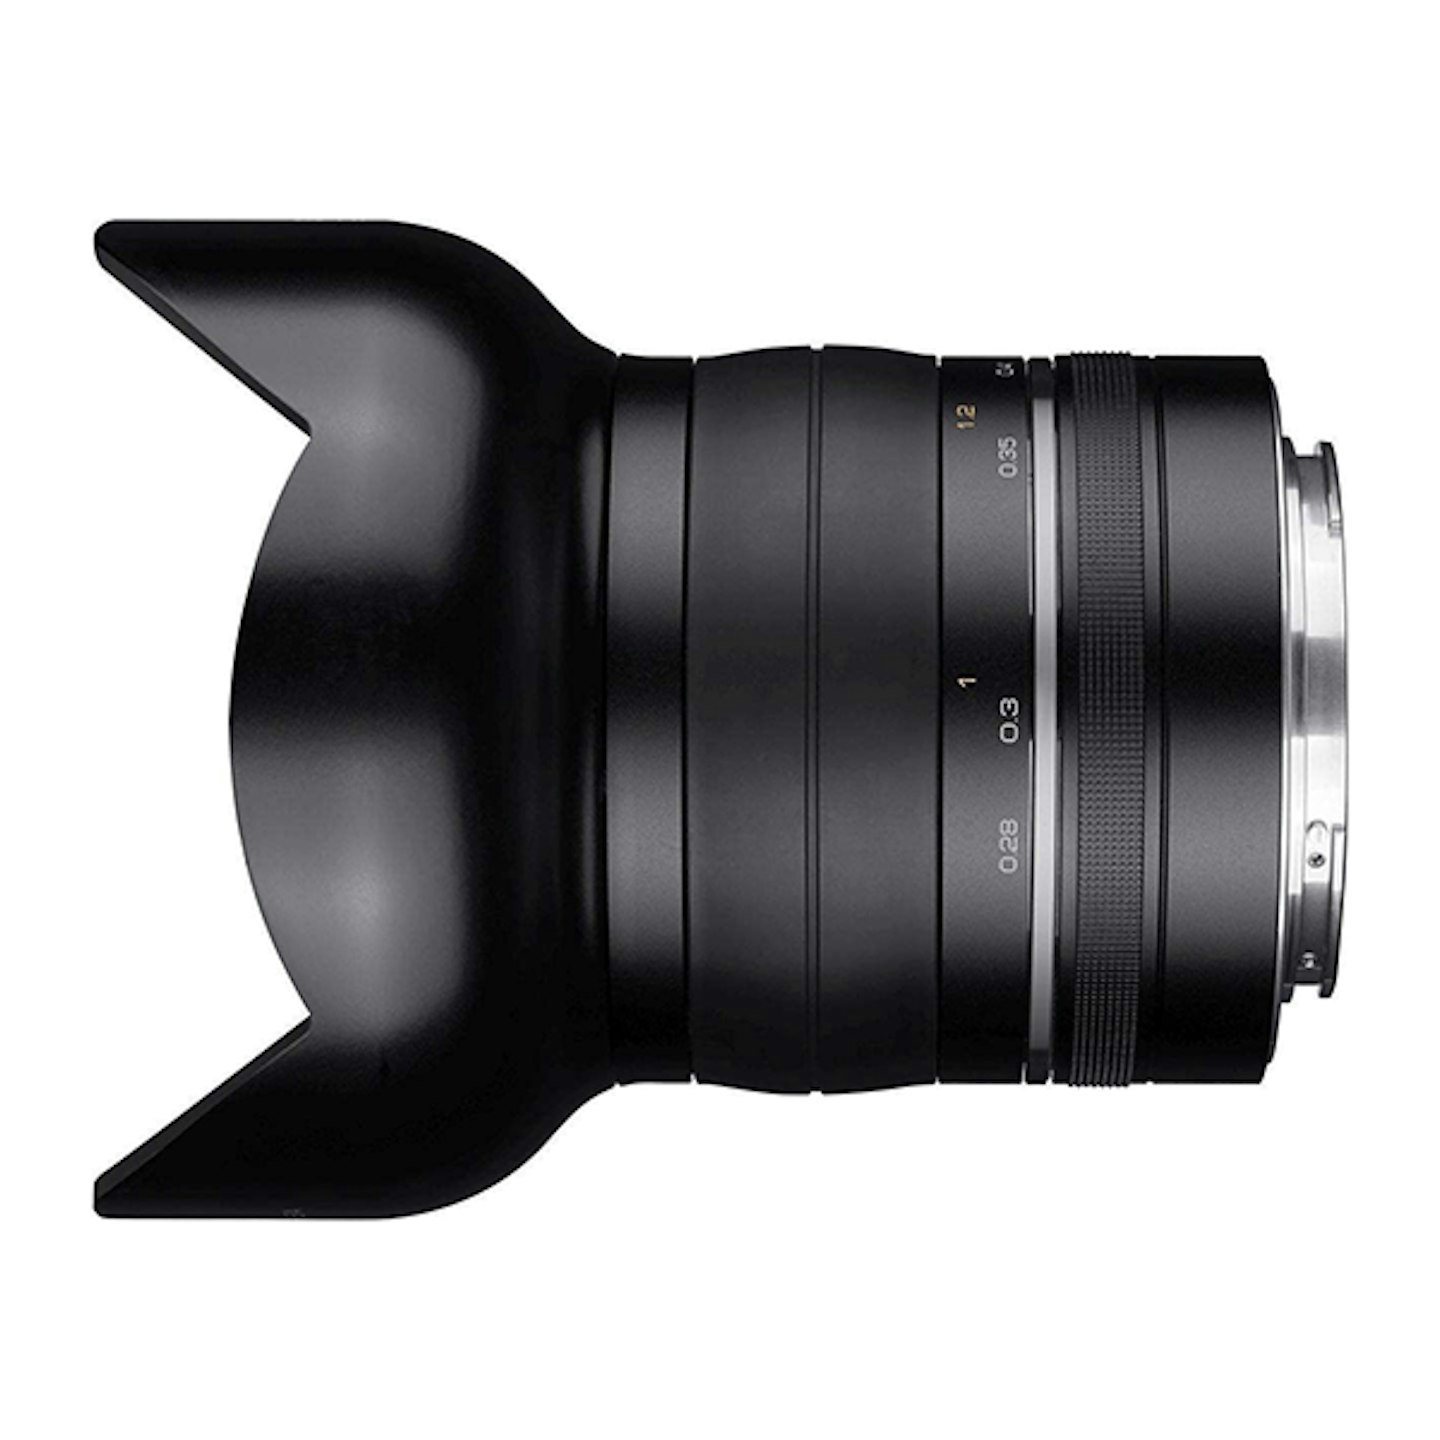 Samyang F2.4 XP AE 14 mm Manual Focus Lens for Canon